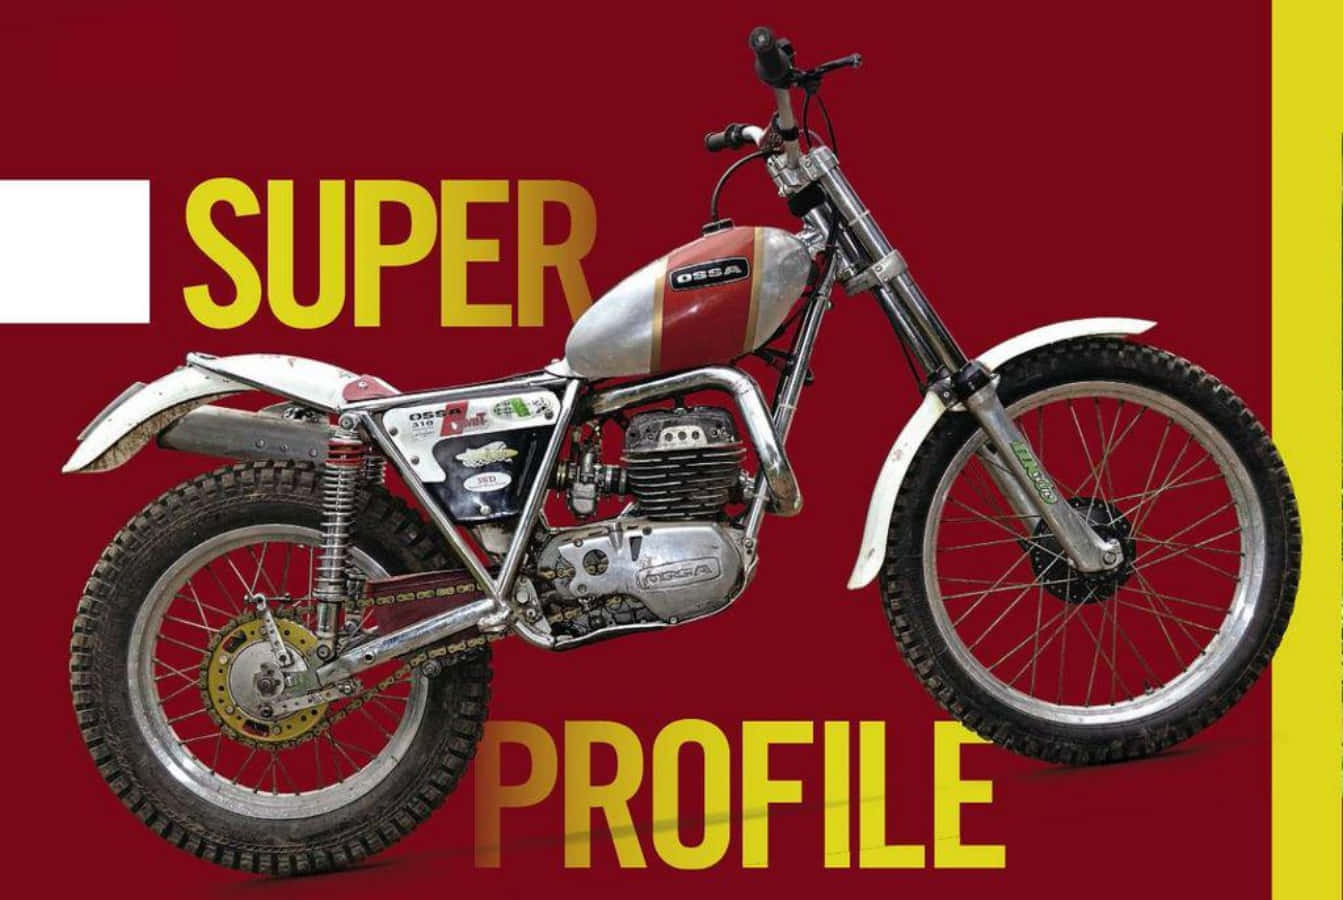 Ossa Motorcycle Super Profile Wallpaper